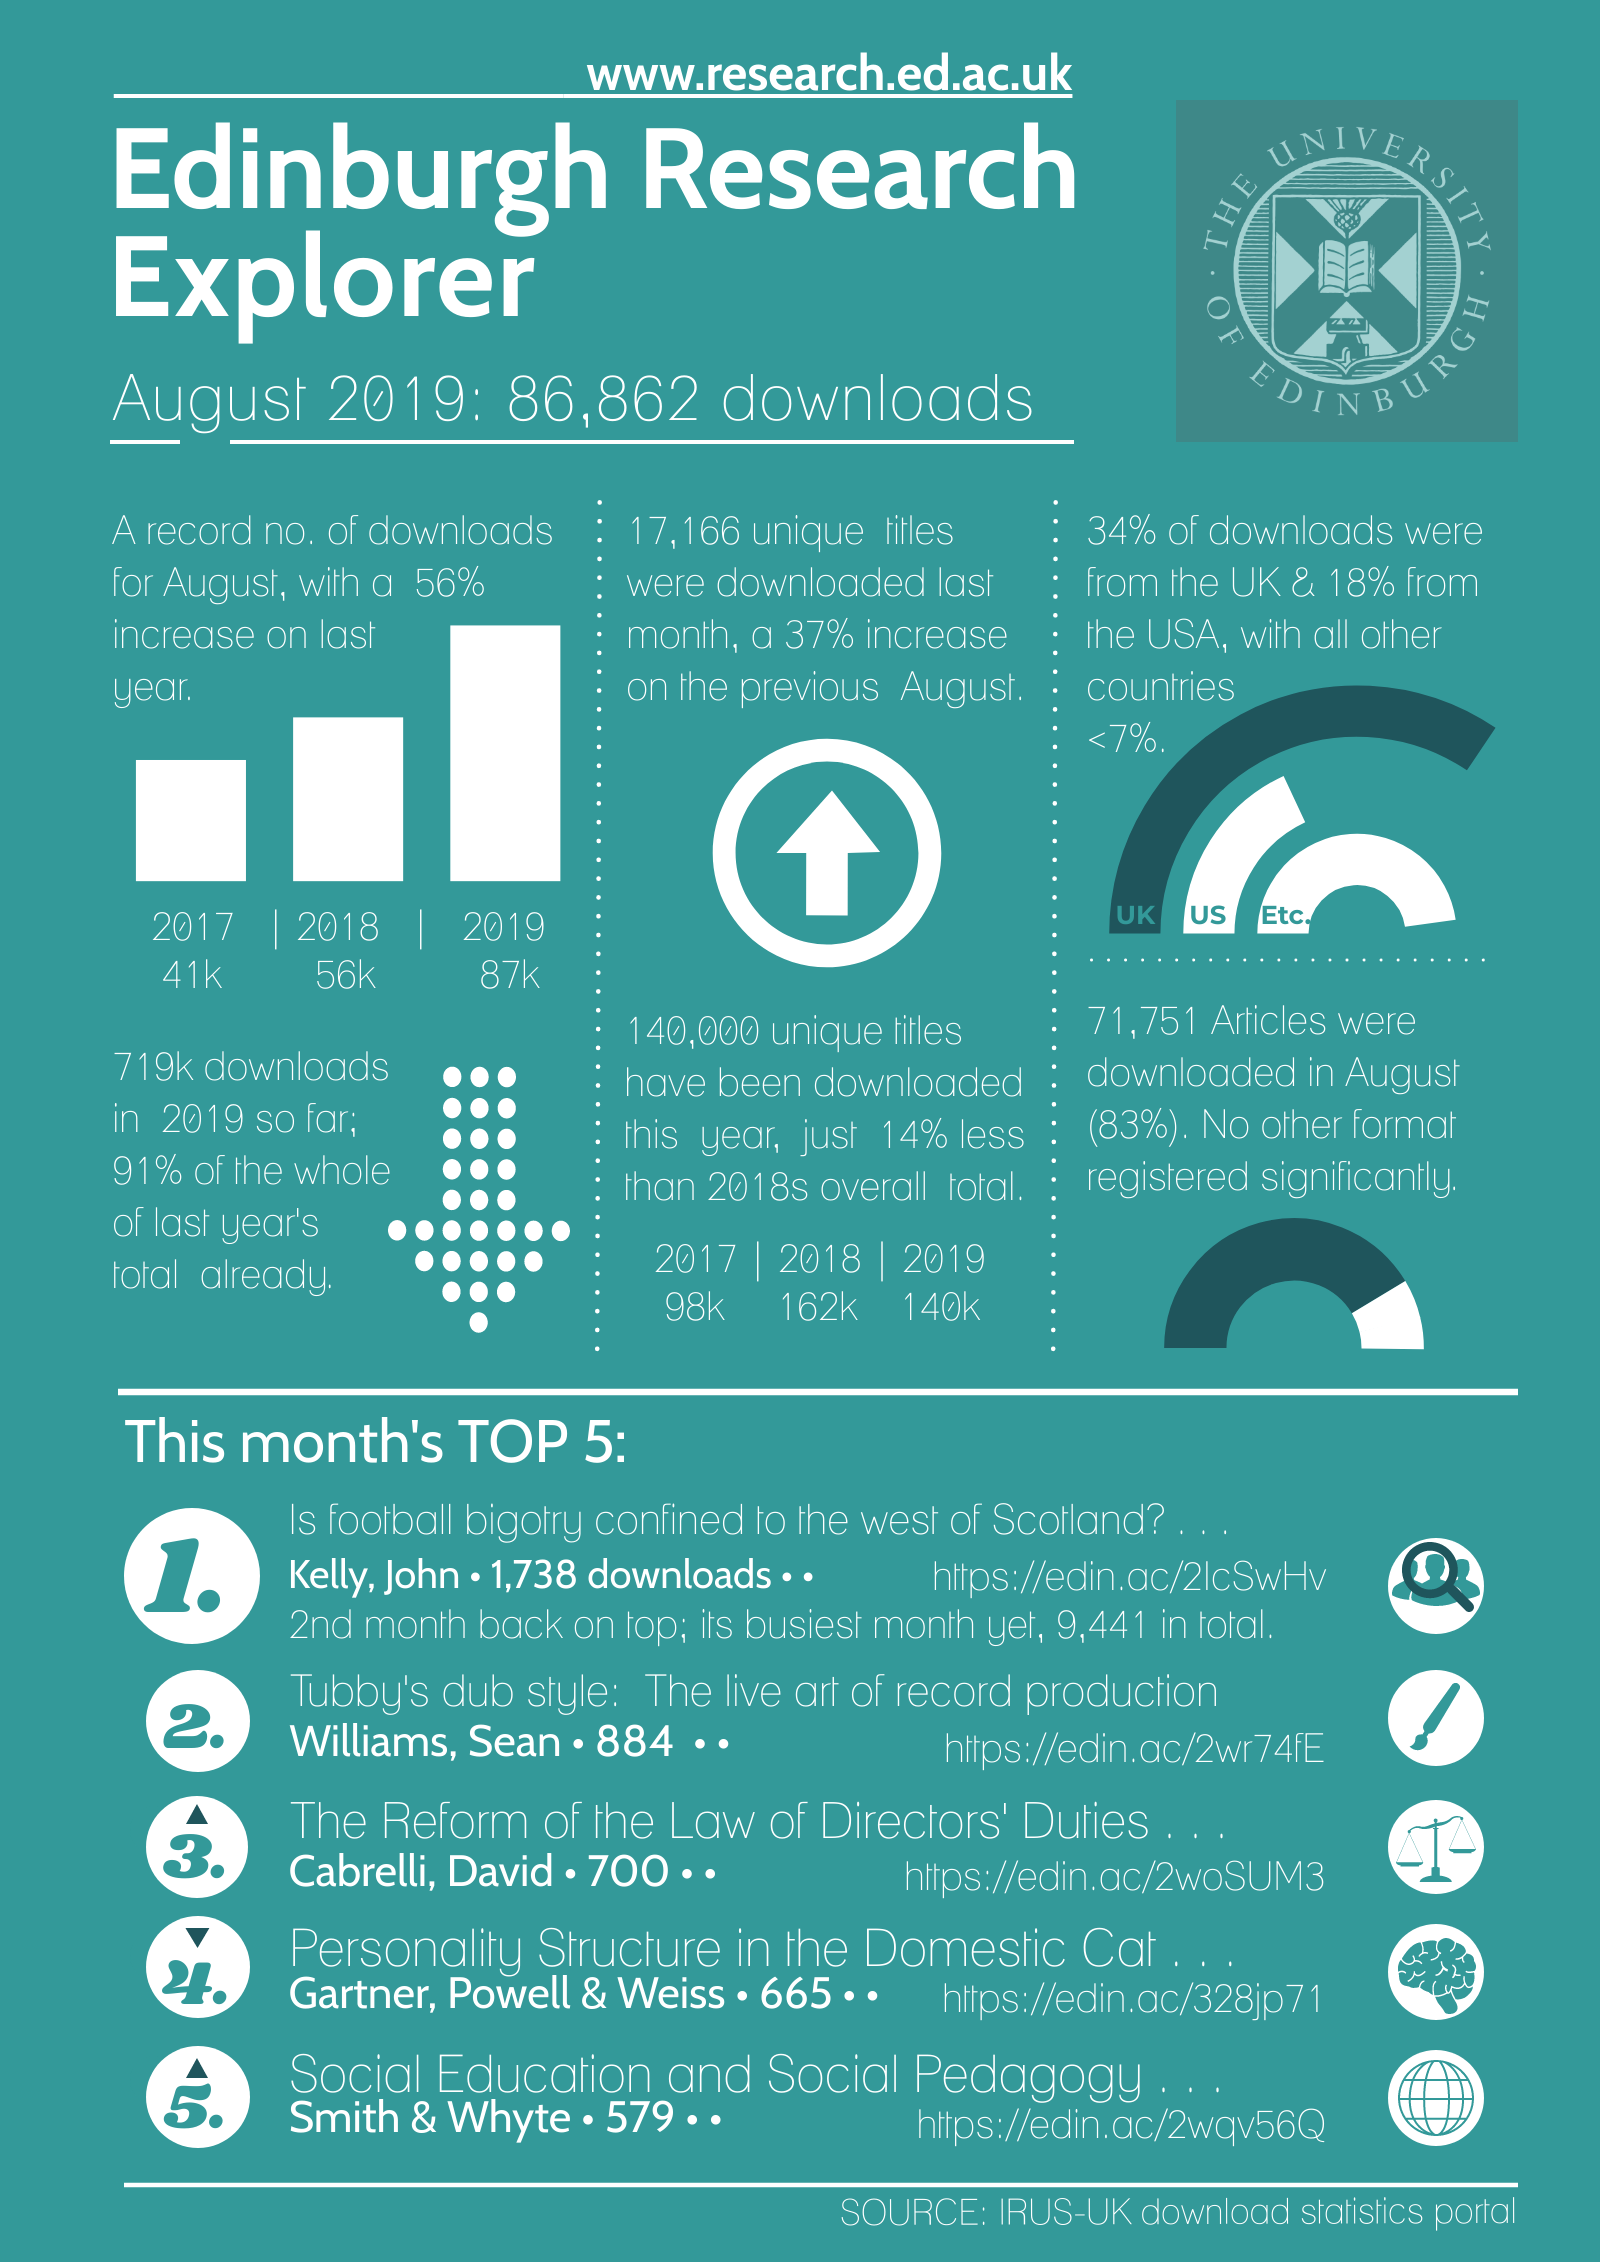 Edinburgh Research Explorer: August 2019 downloads infographic